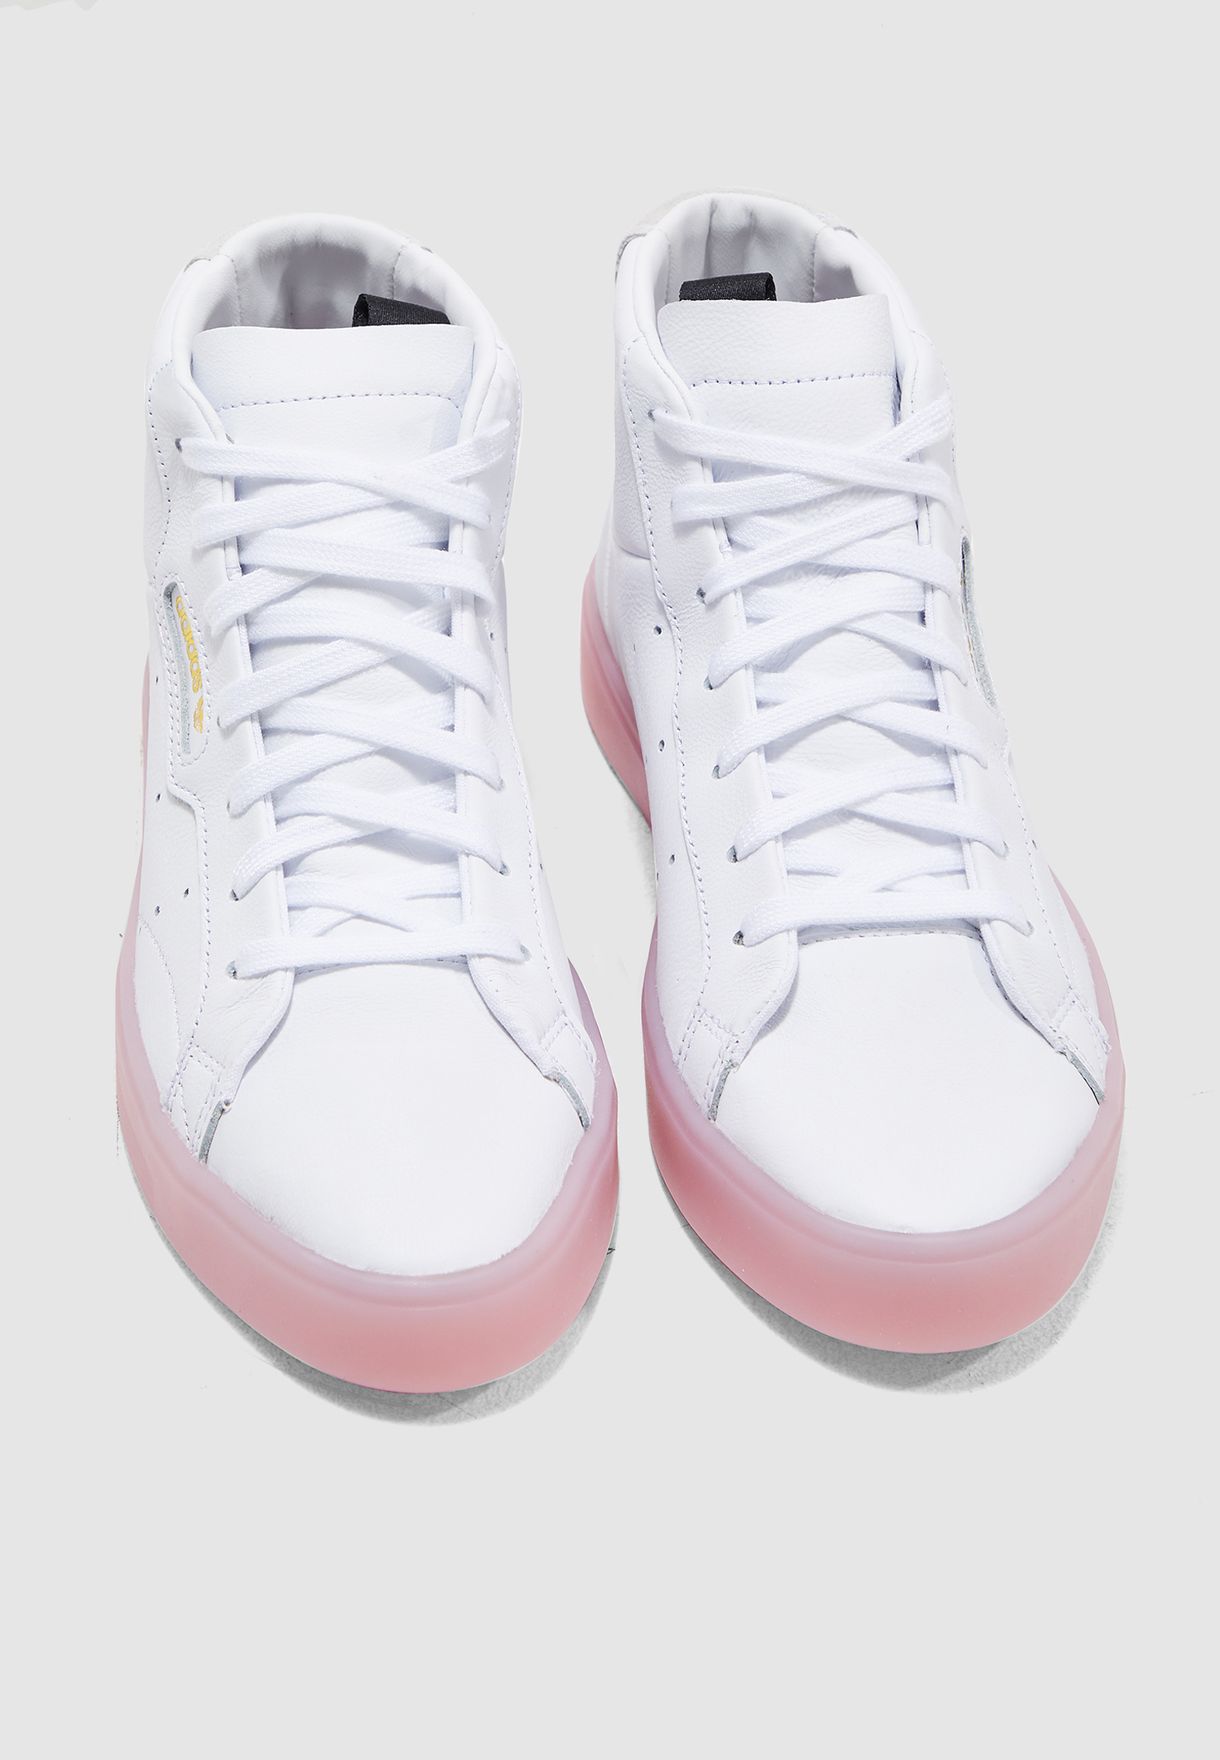 adidas originals sleek mid top sneaker in white and pink